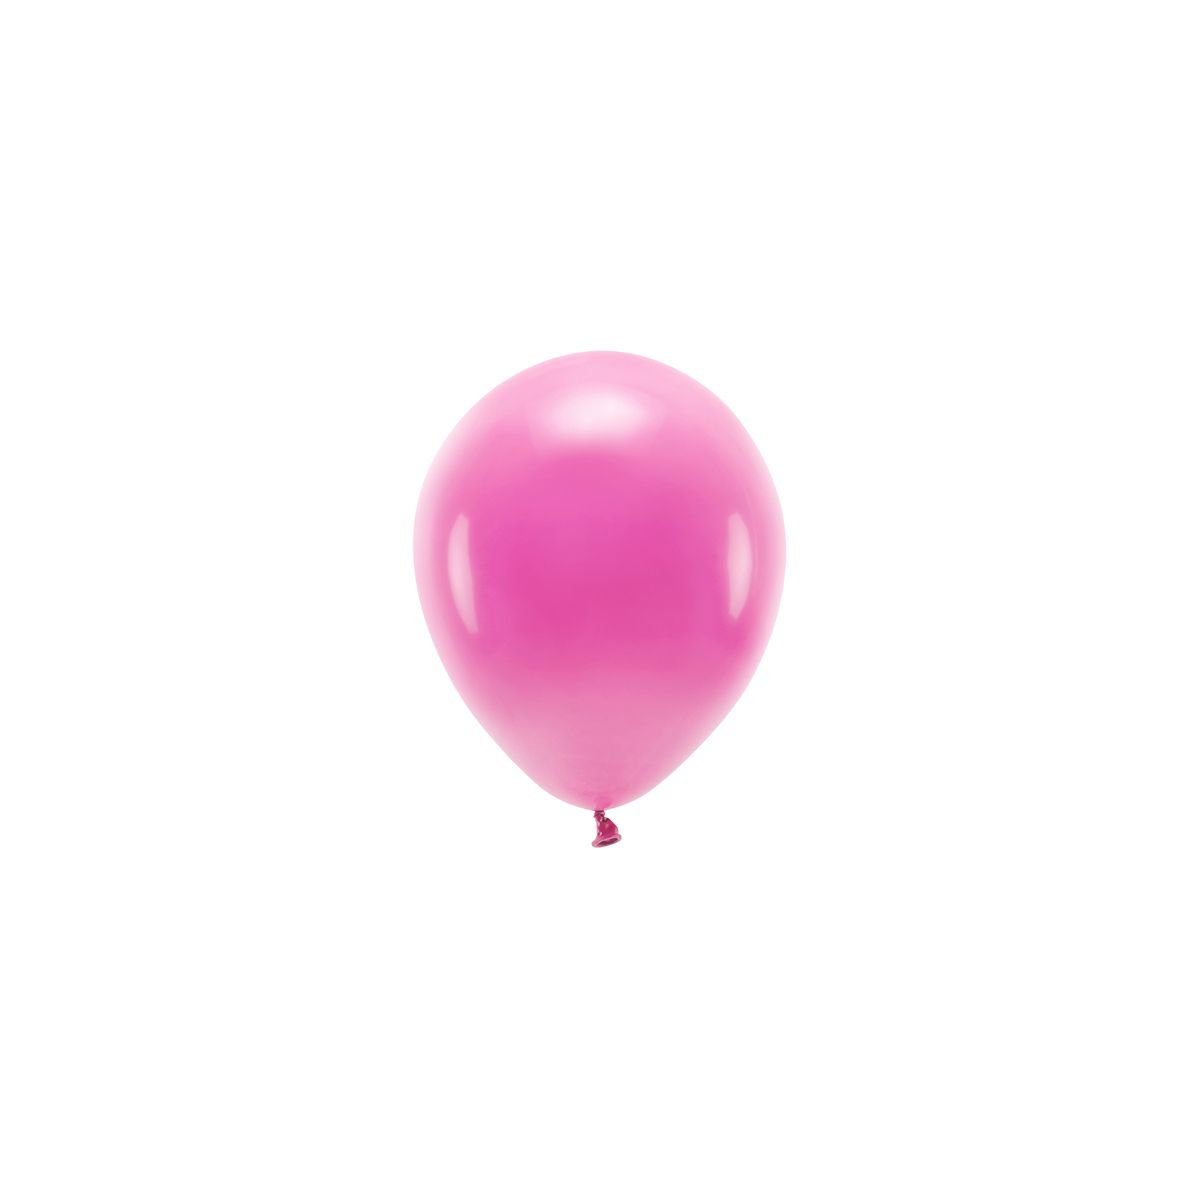 Balon gumowy Partydeco Pastel Eco Balloons fuksja 260mm (ECO26P-080)